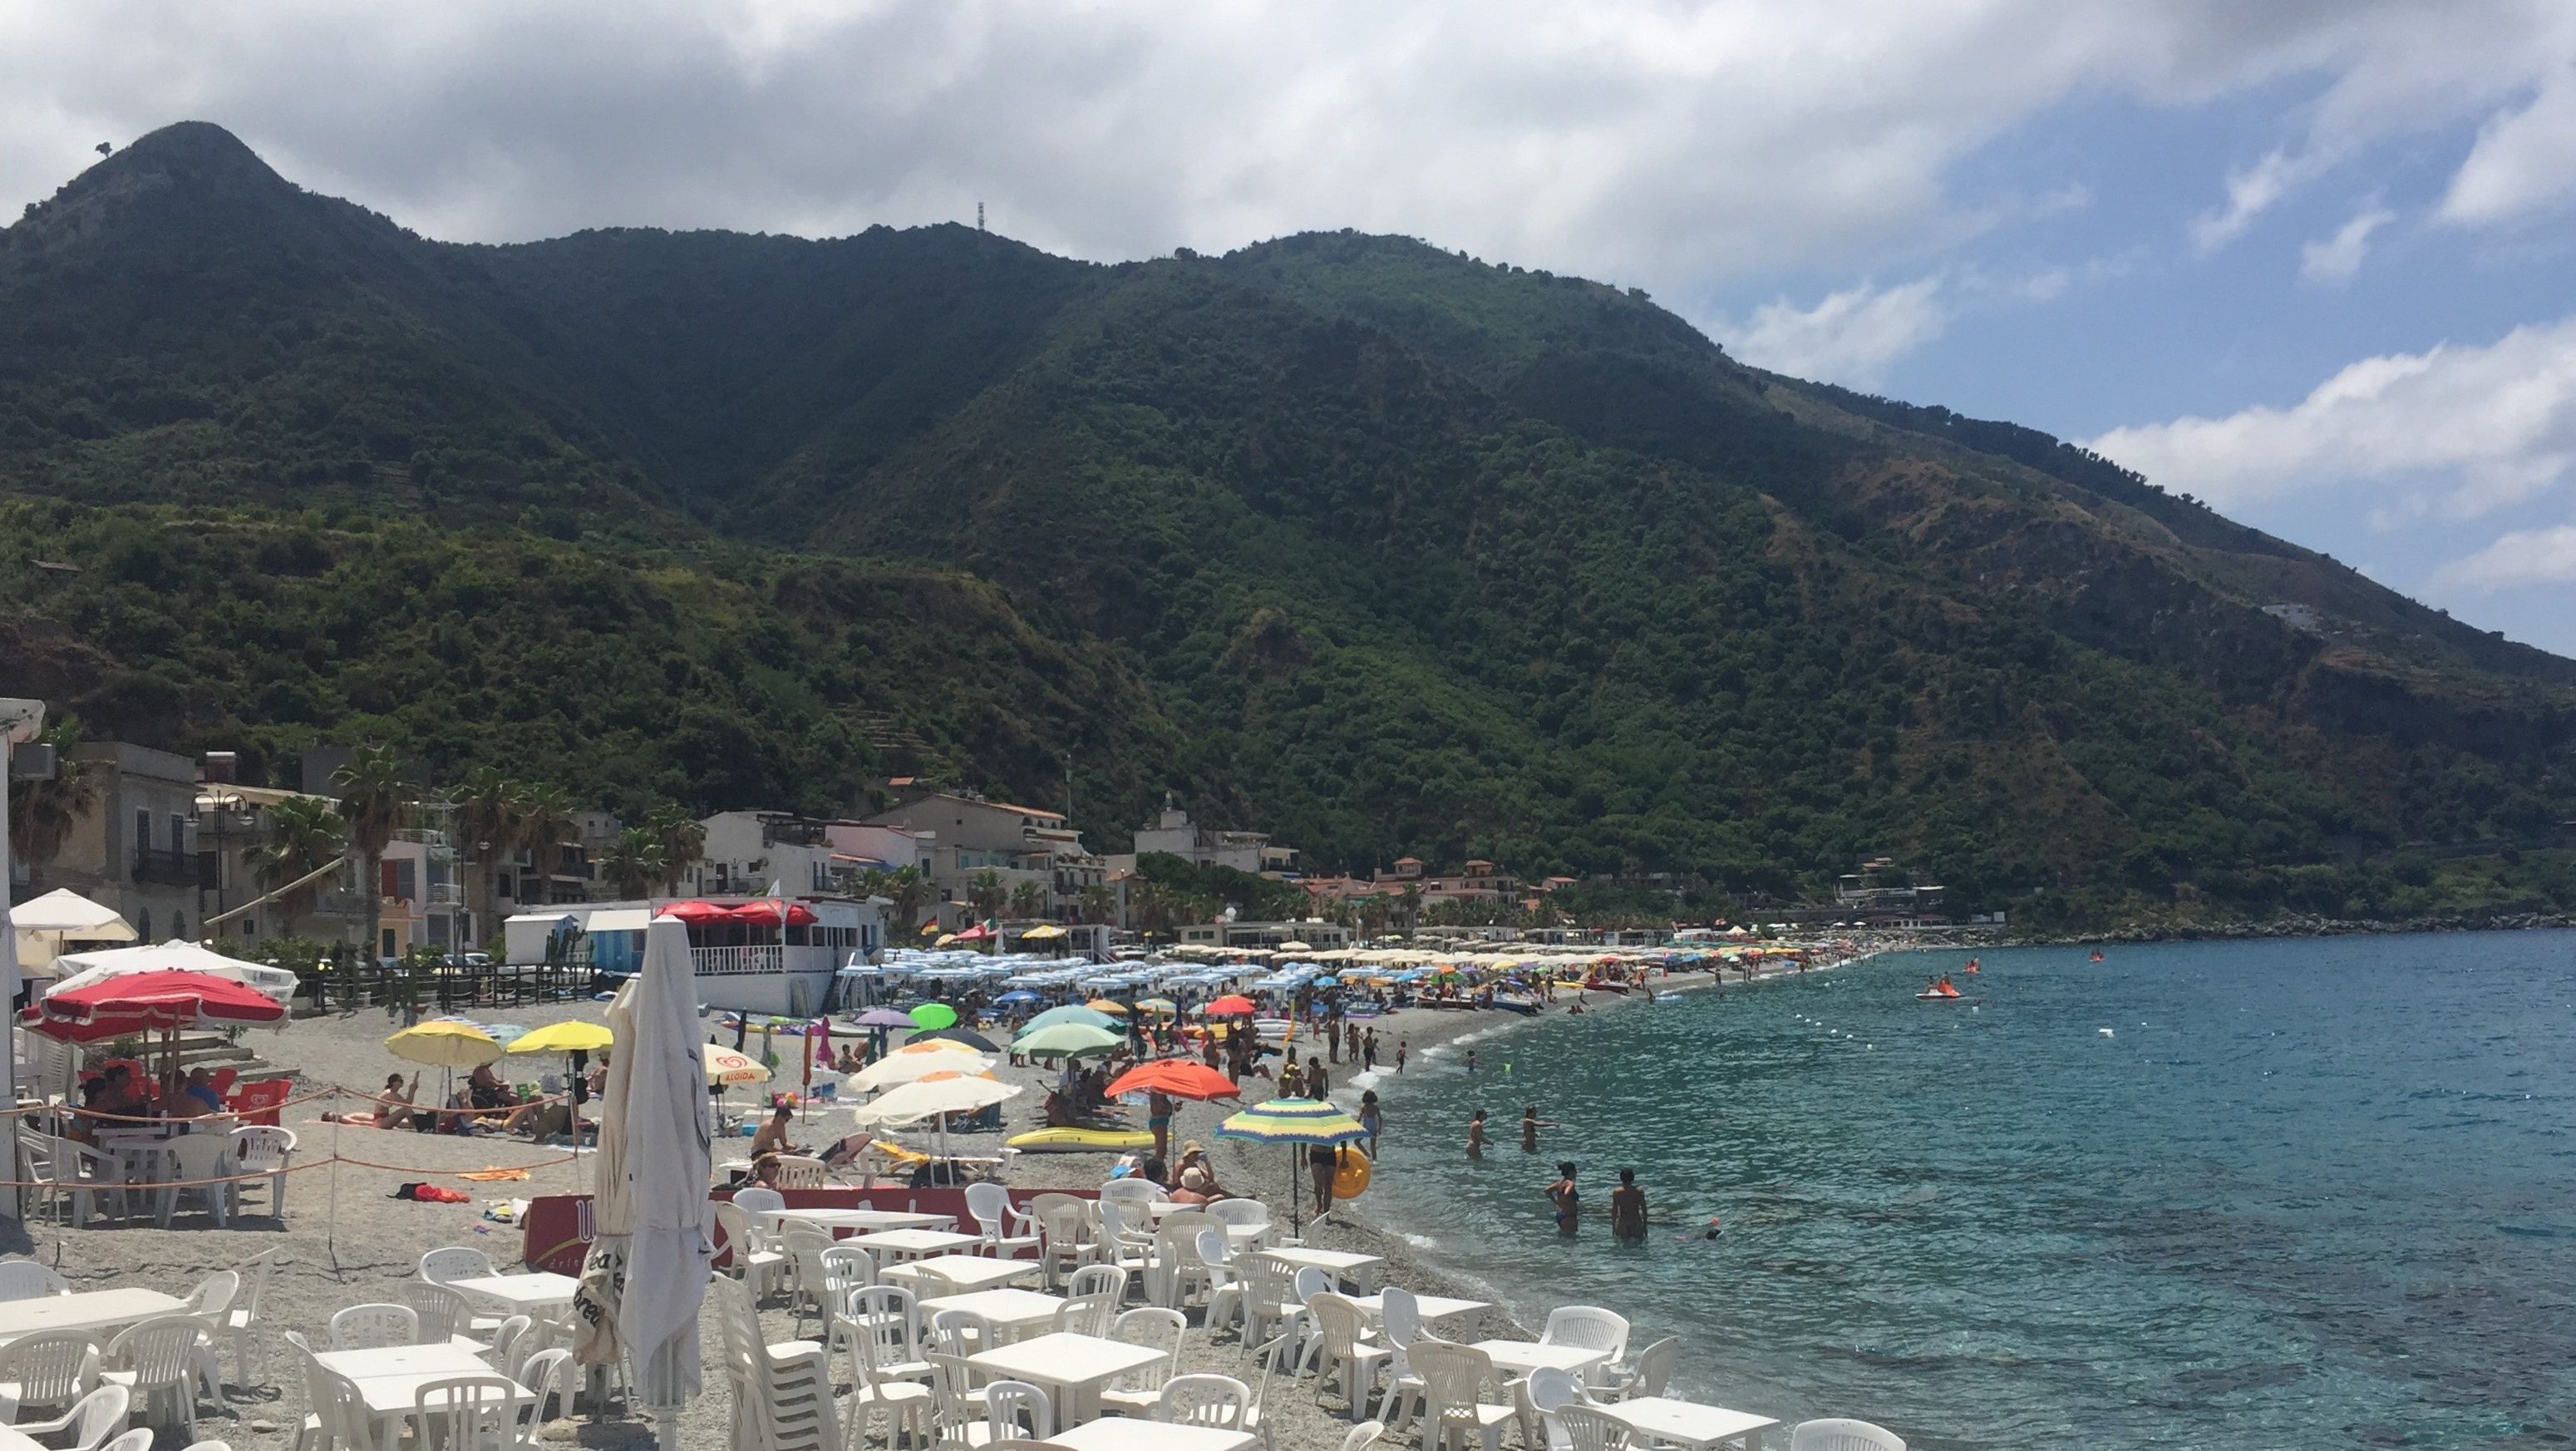 Beach clubs and beach chairs in Scilla, Calabria Italy